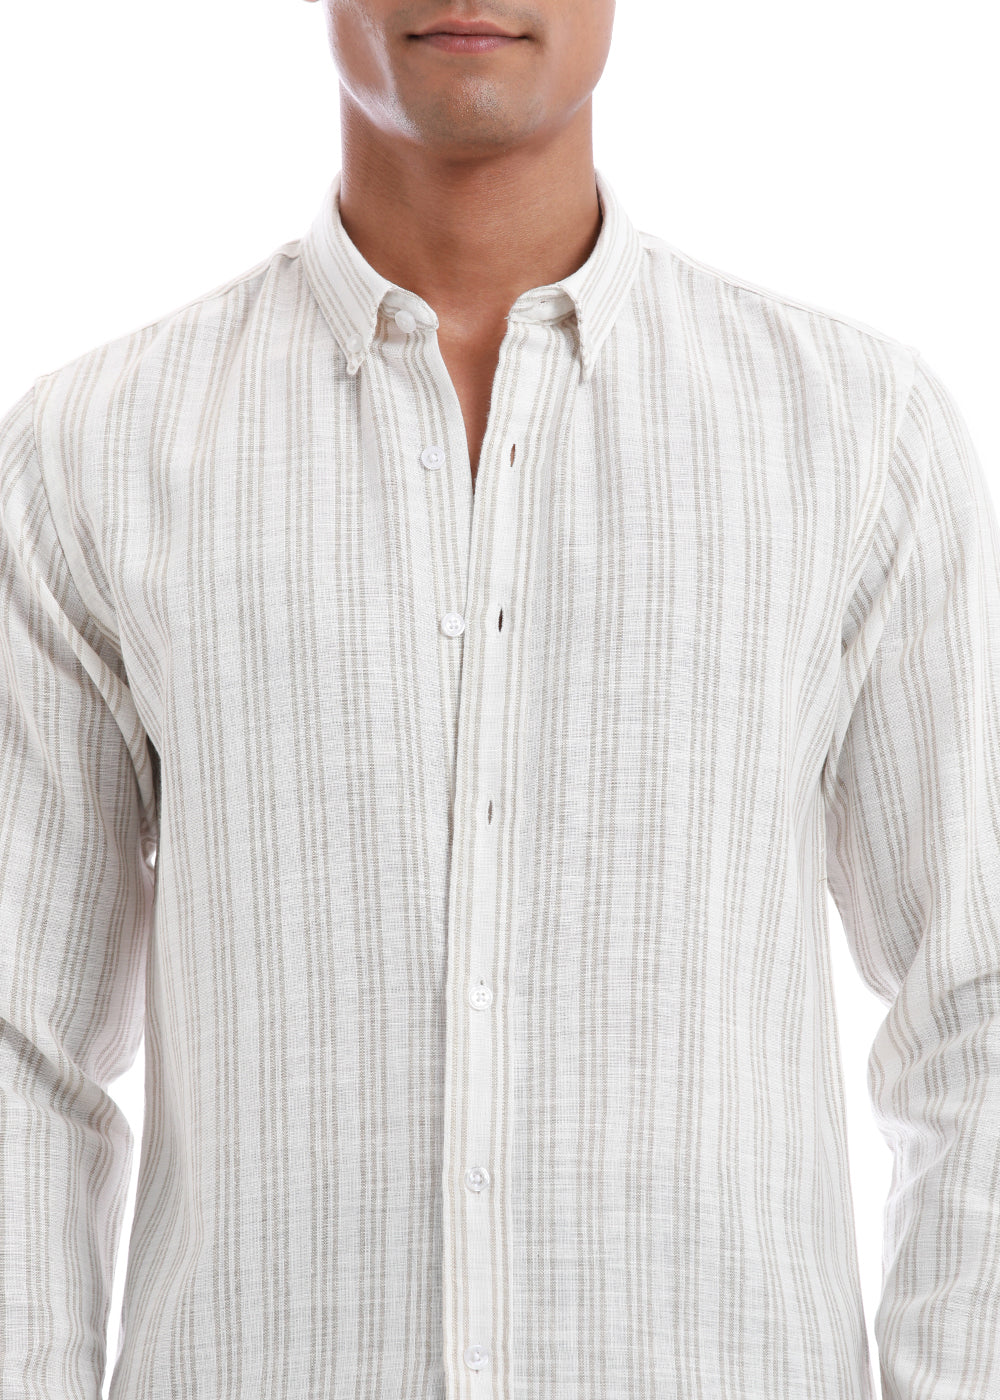 Loral Oak Stripe Blended Linen shirt